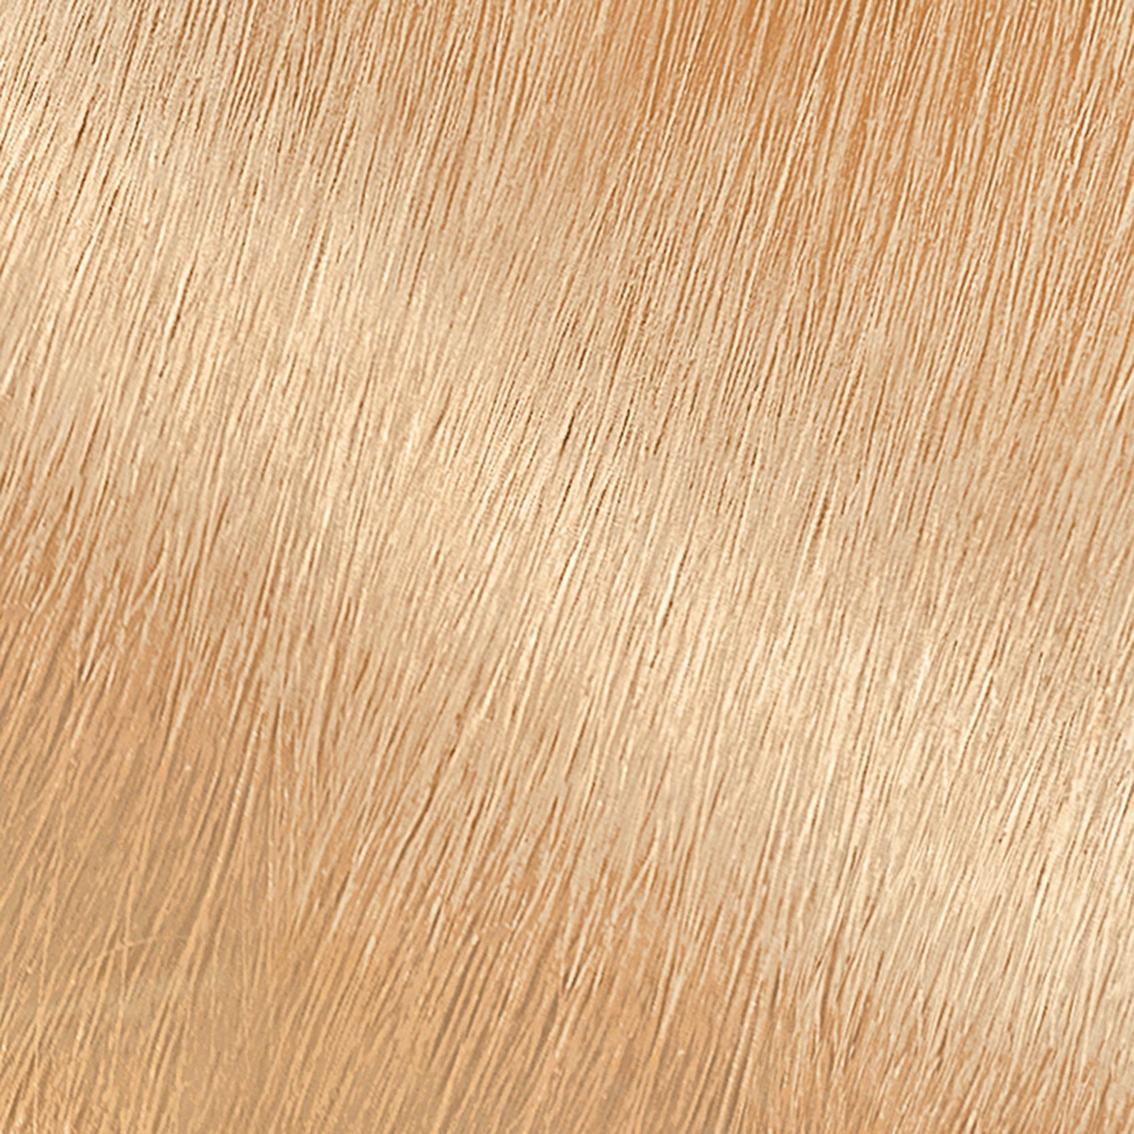 Garnier Nutrisse Nourishing Hair Color Creme - Image 4 of 4